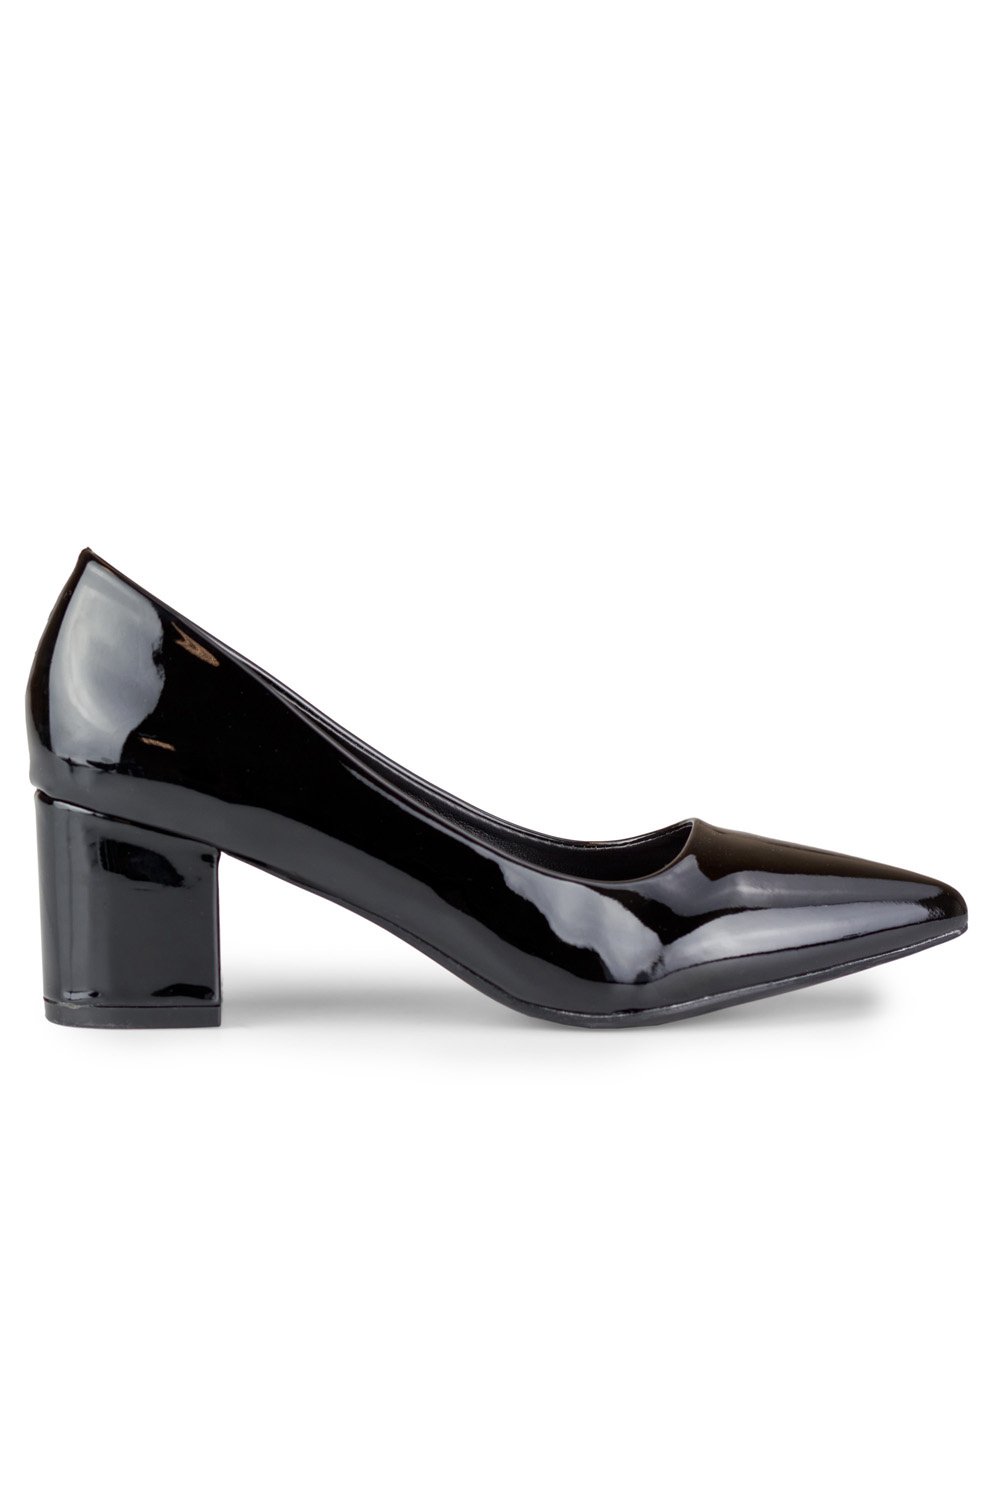 Black block heel pumps model 184852 PRIMO-3